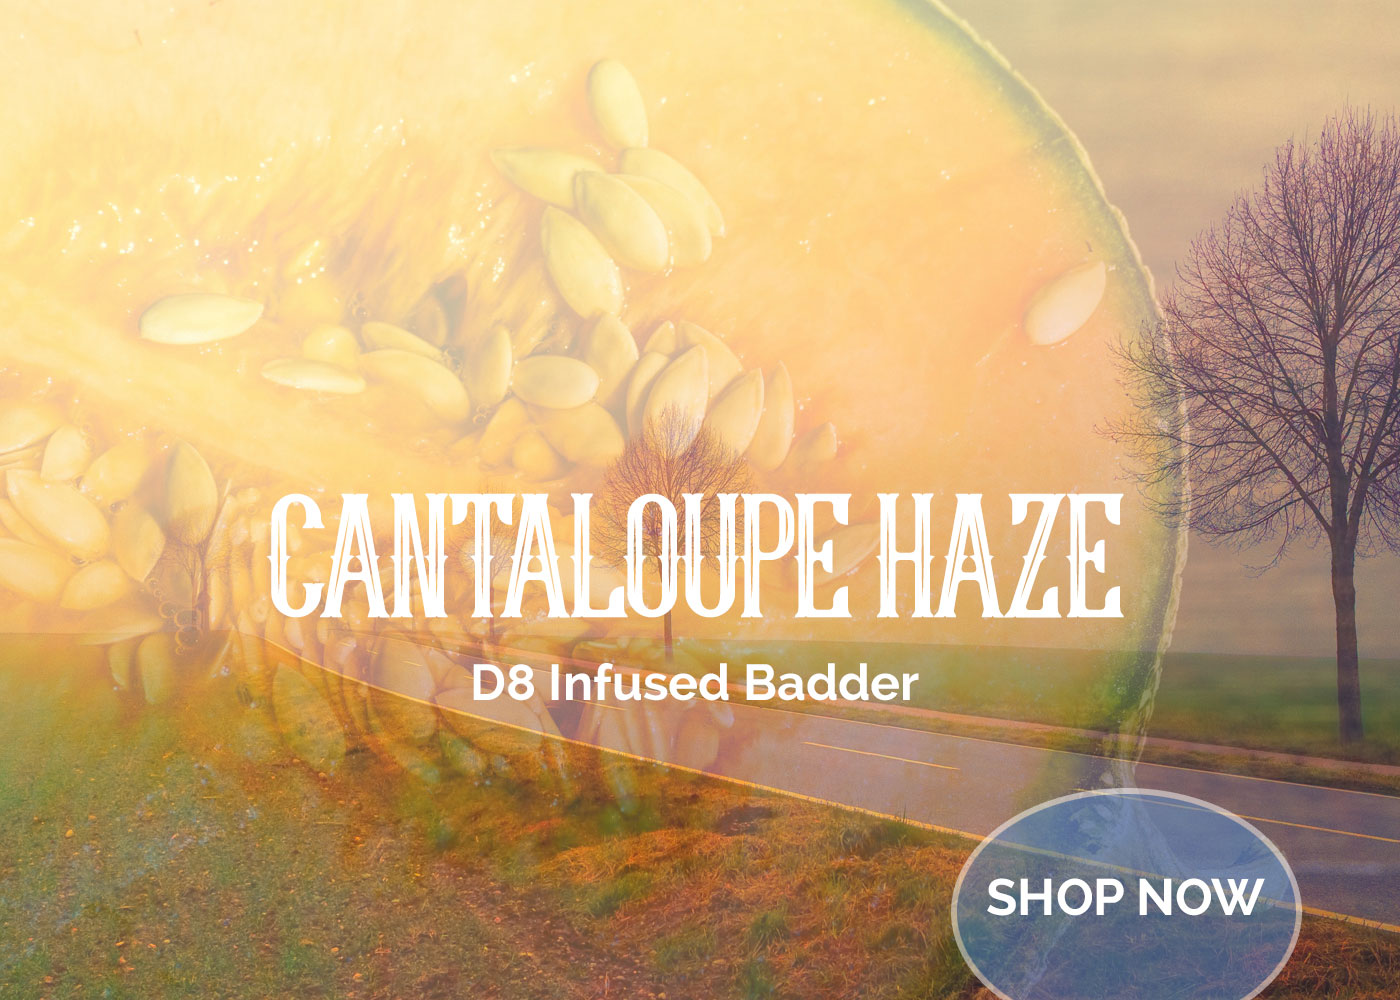 Cantaloupe Haze D8 Infused Badder For Sale